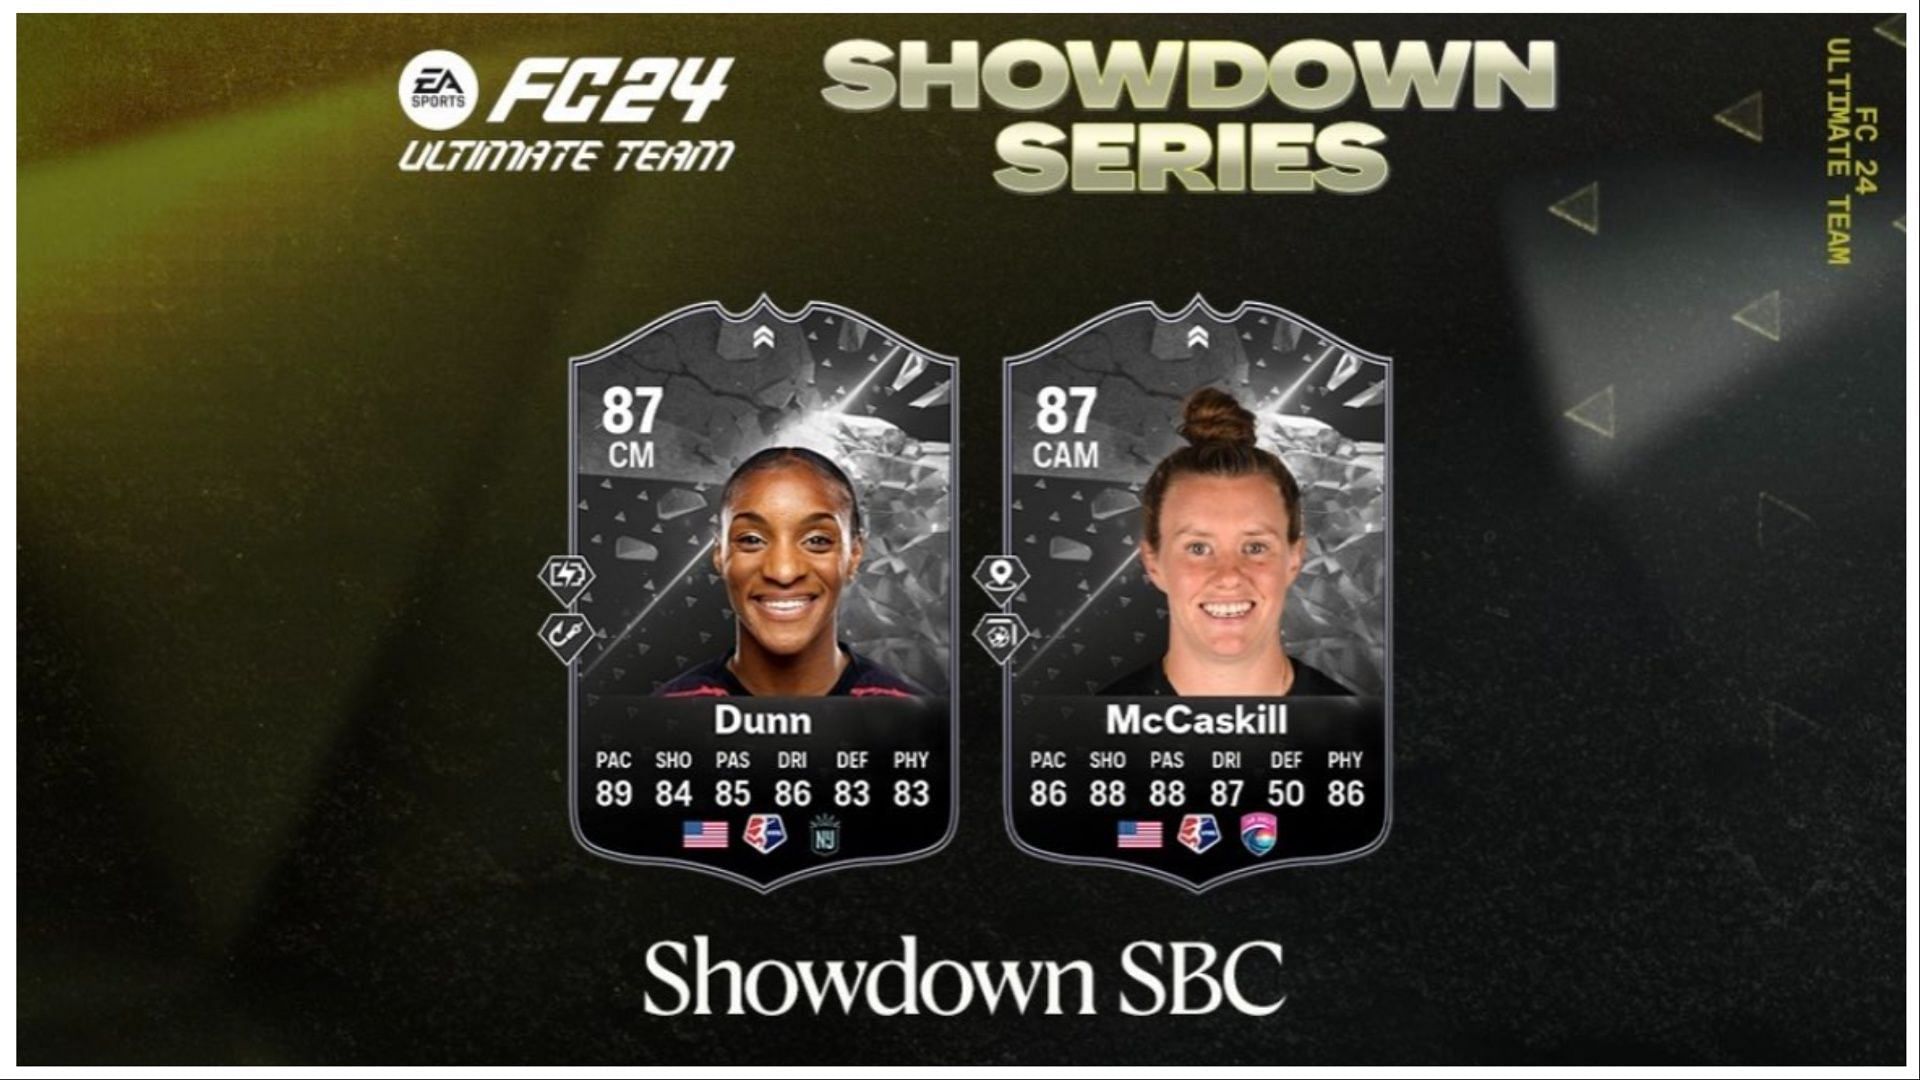 The EA FC 24 Dunn vs McCaskill Showdown SBC is now live